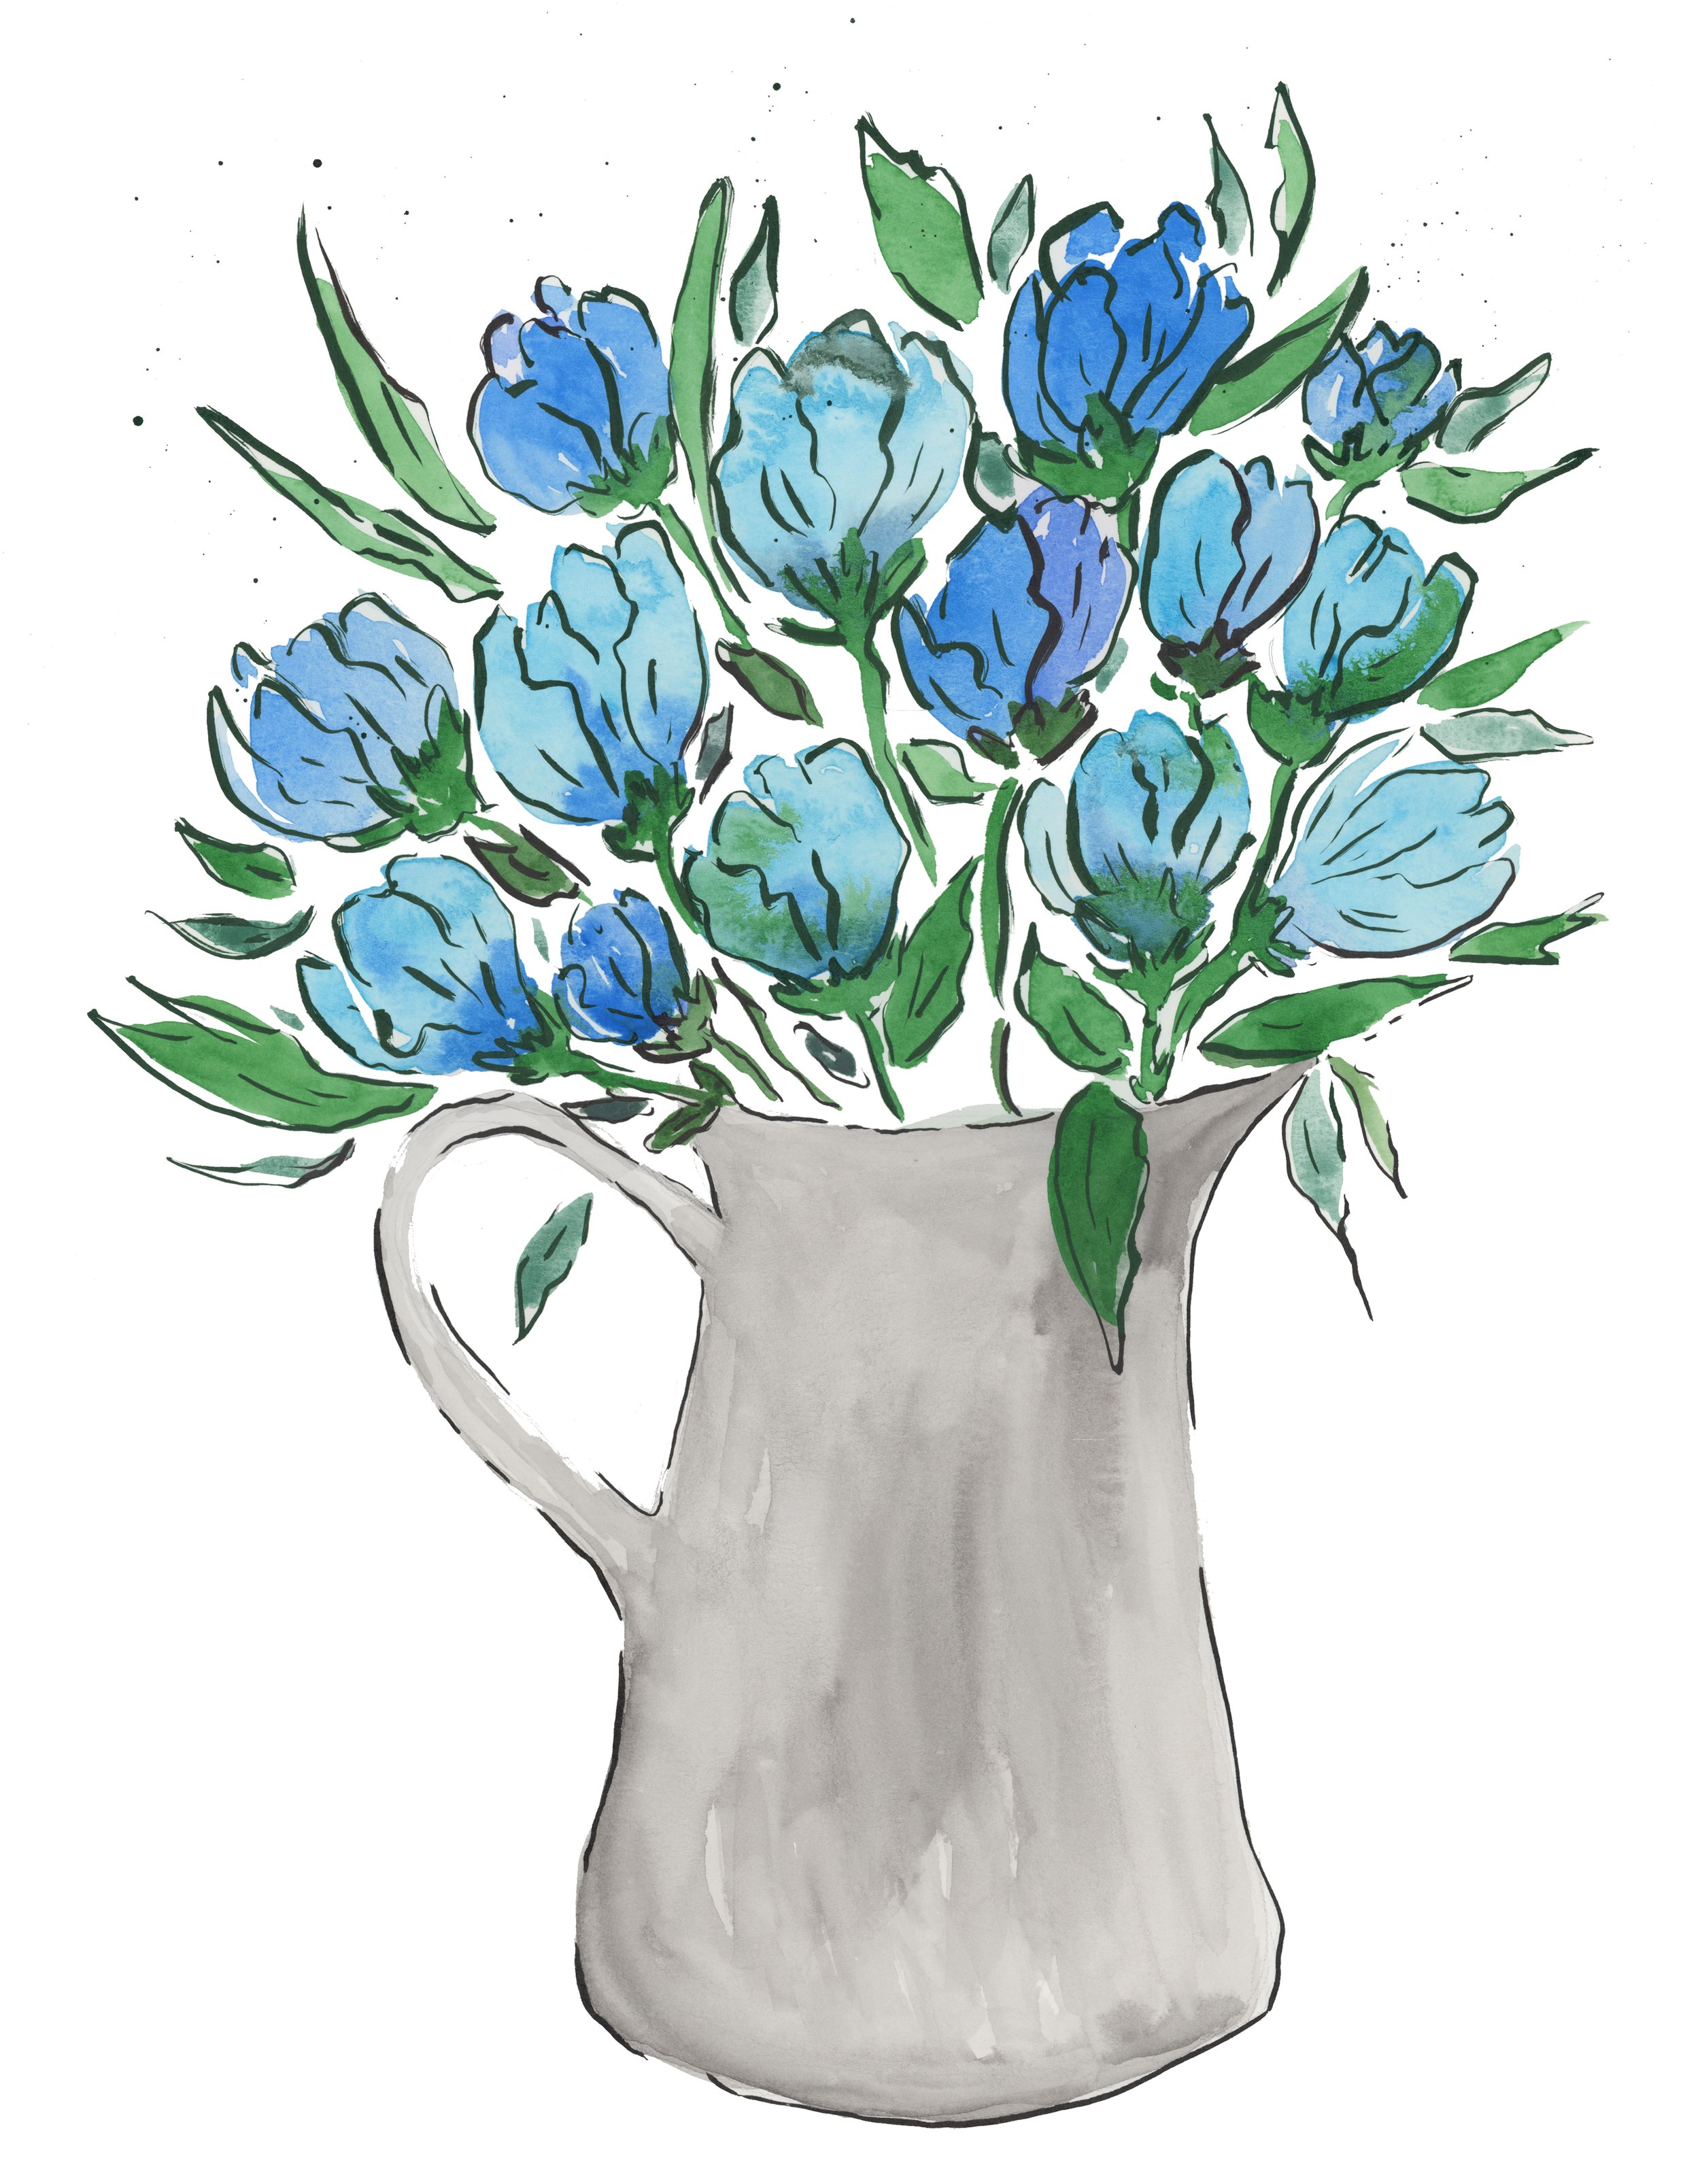 Blue Tulips copy 2.jpg